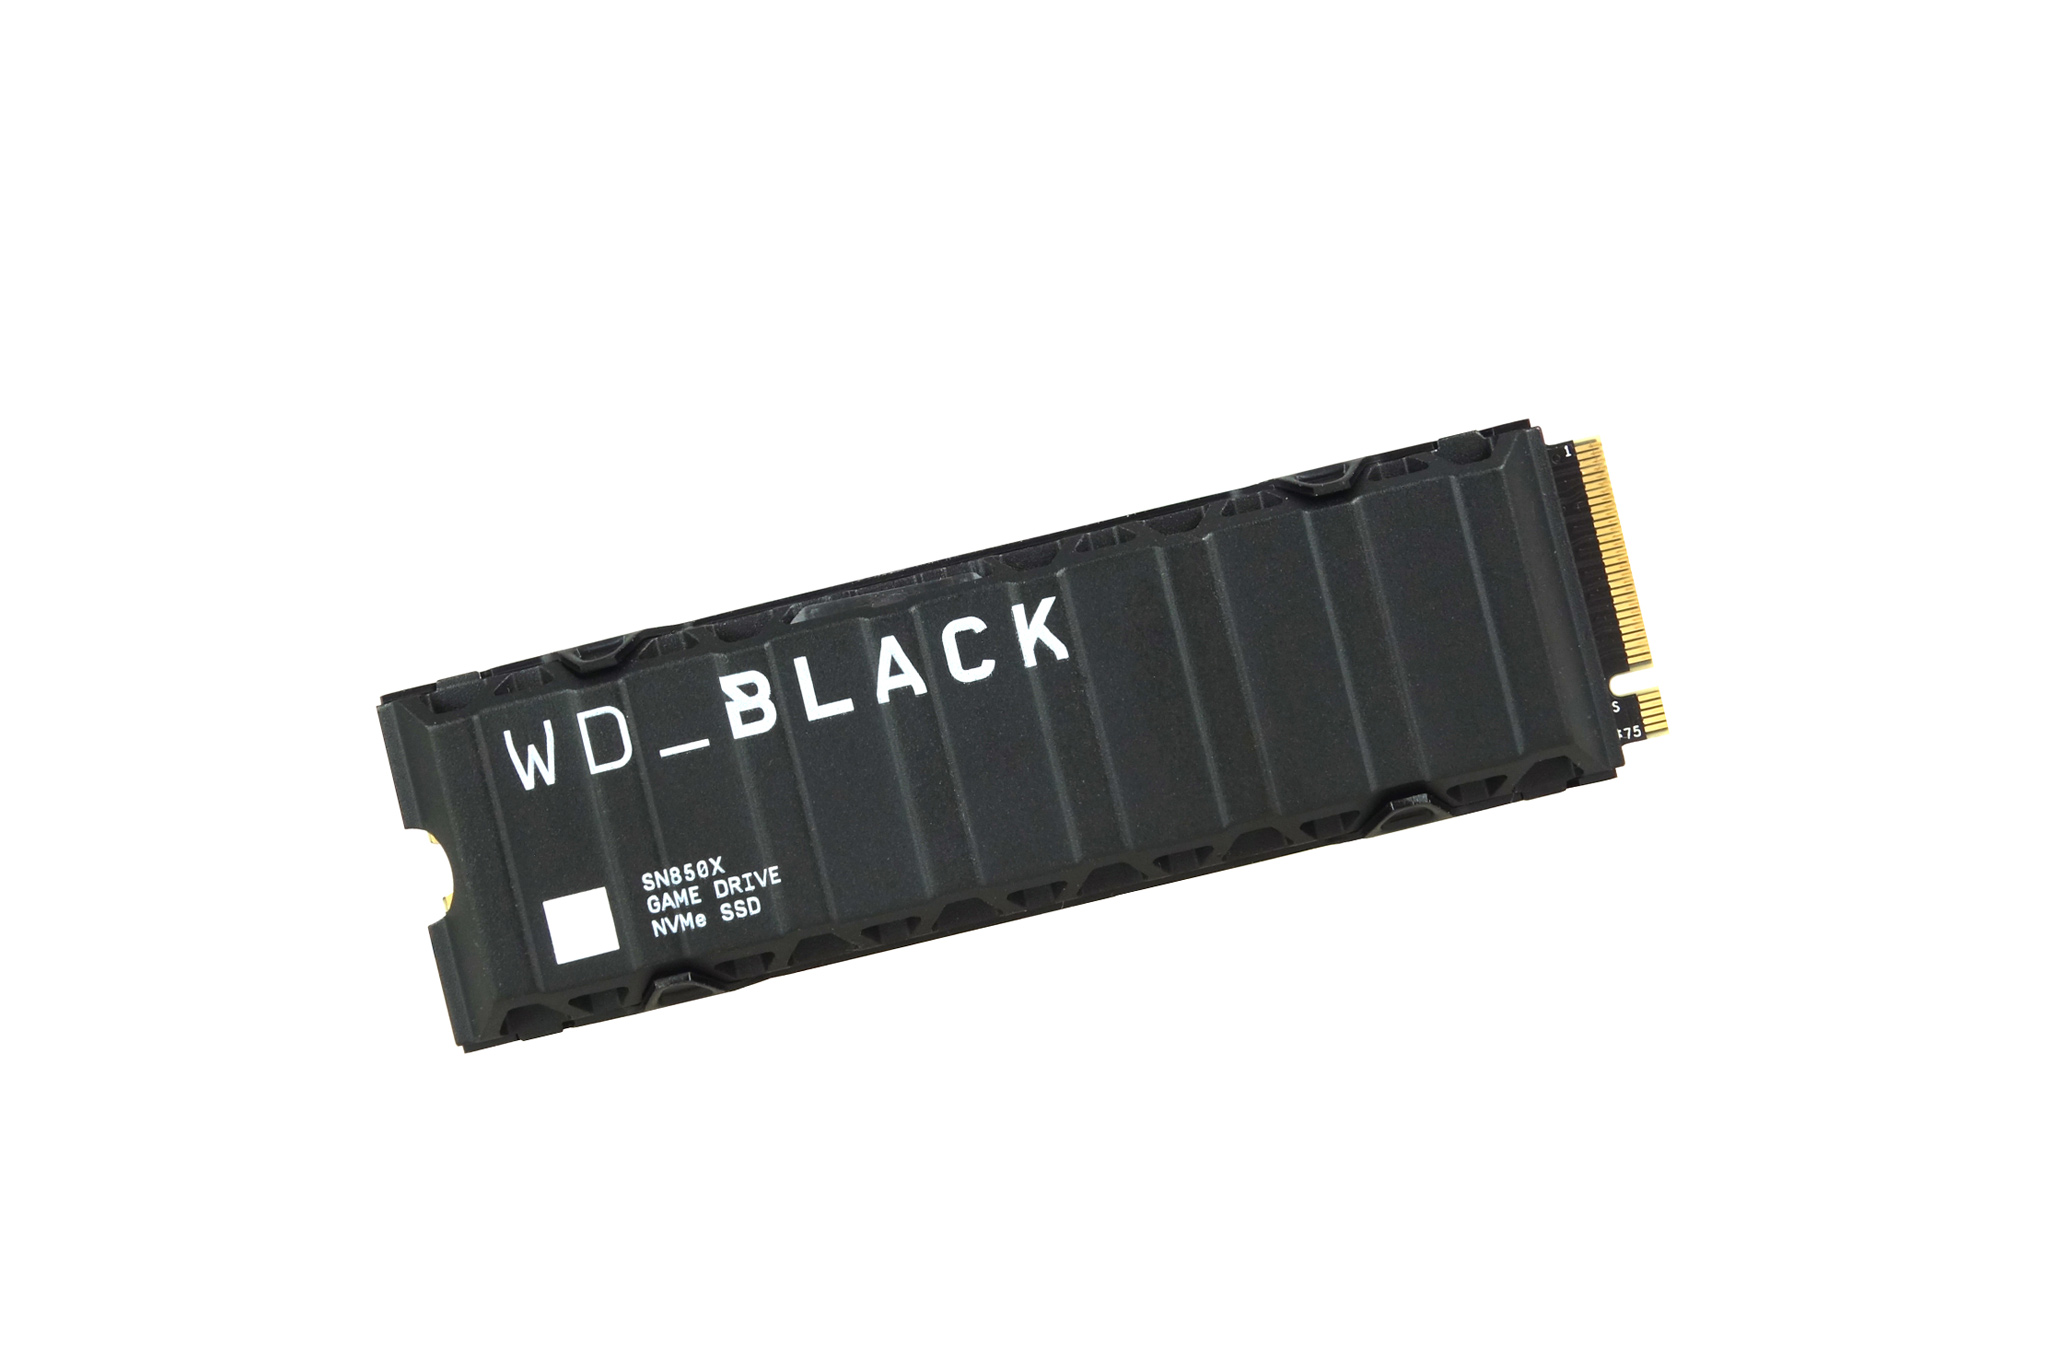 WD Black SN850X with Heatsink 2TB SSD Review